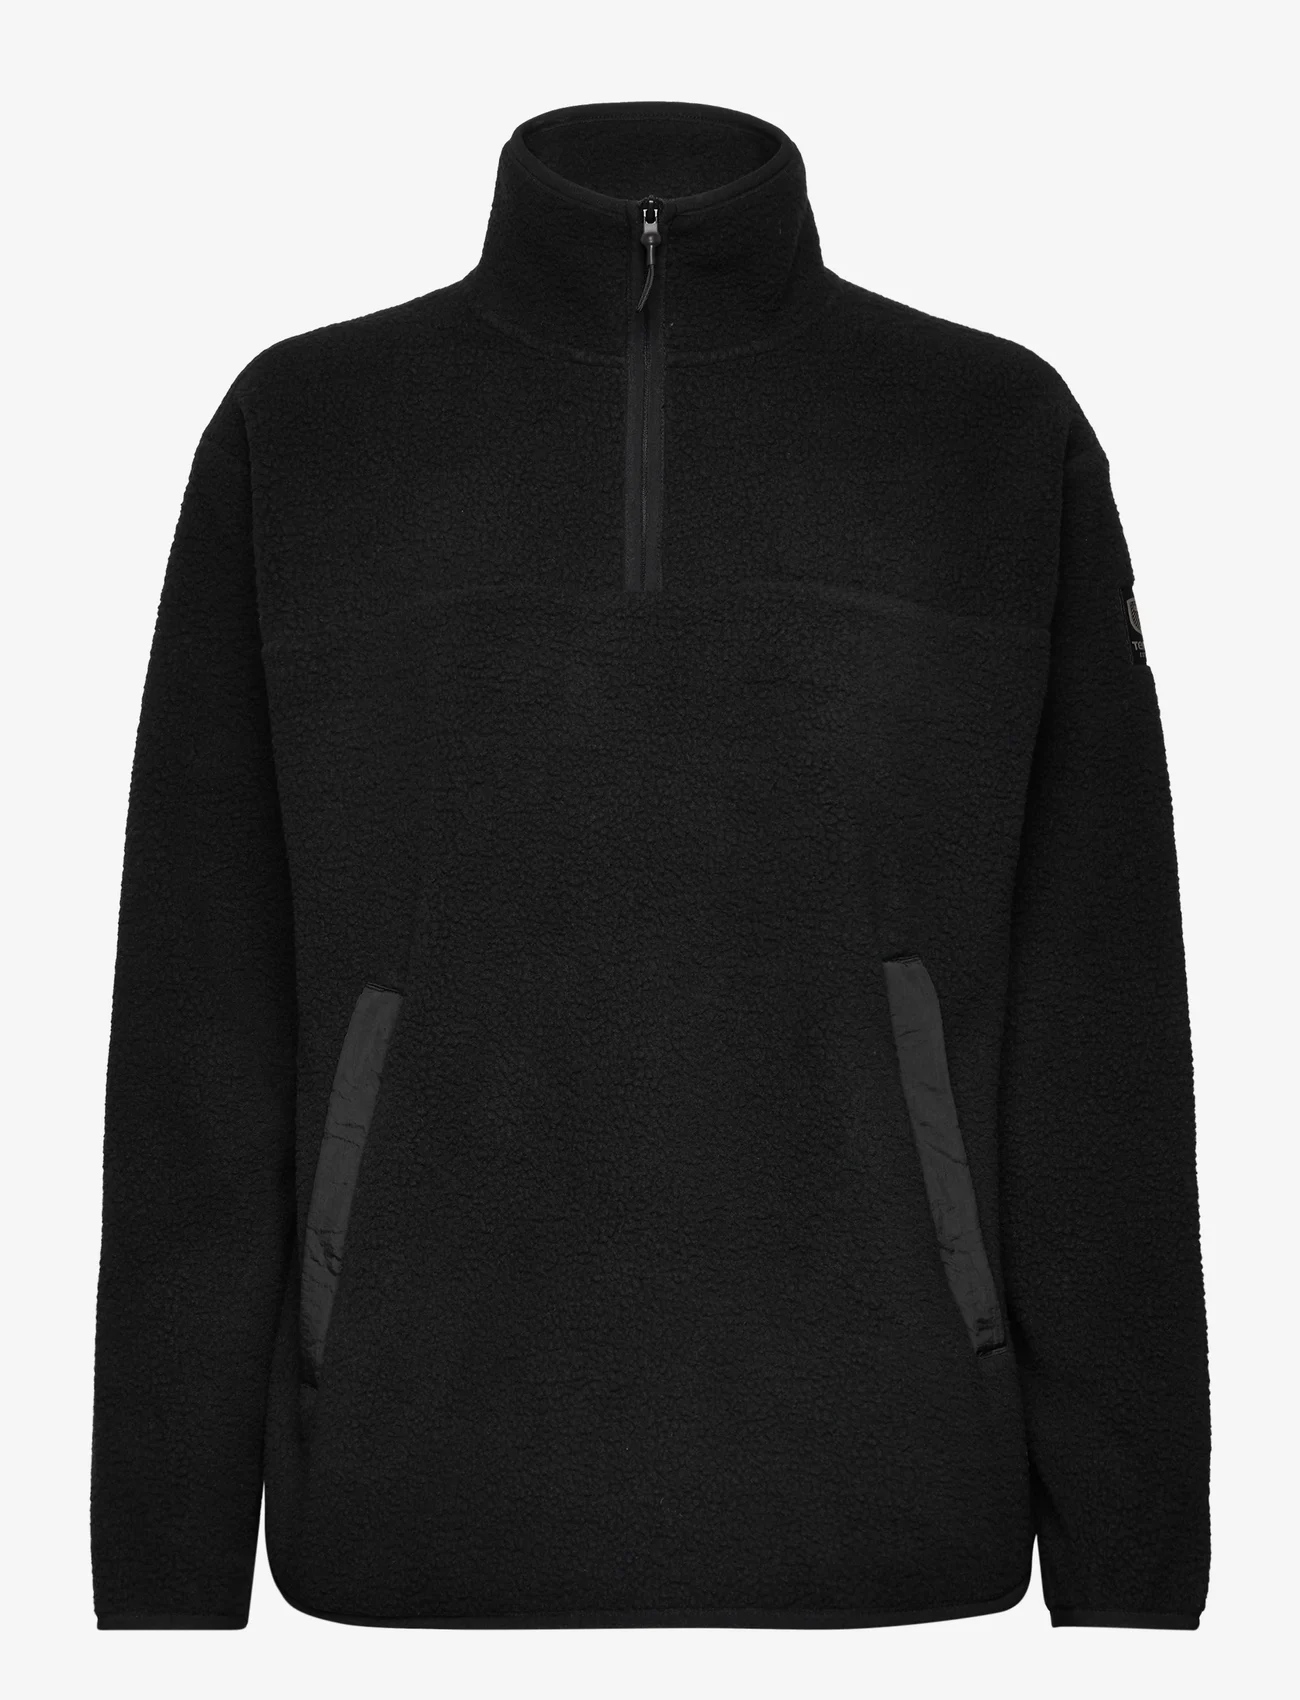 Tenson - Yoke Halfzip - mid layer jackets - black - 0